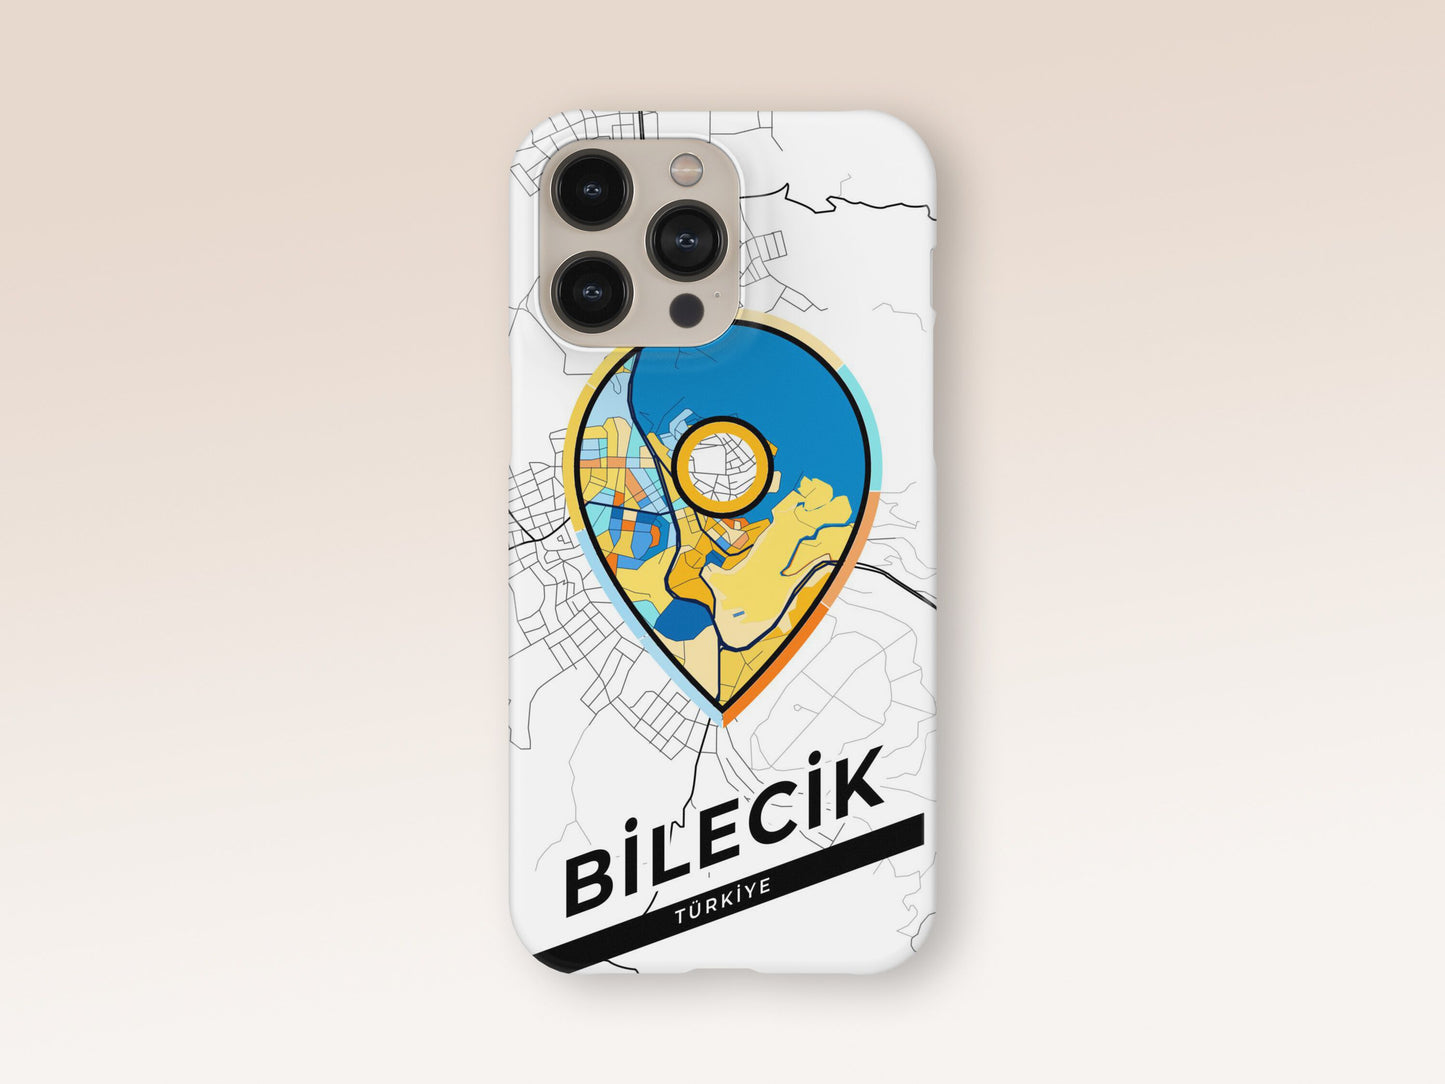 Bilecik Turkey slim phone case with colorful icon. Birthday, wedding or housewarming gift. Couple match cases. 1